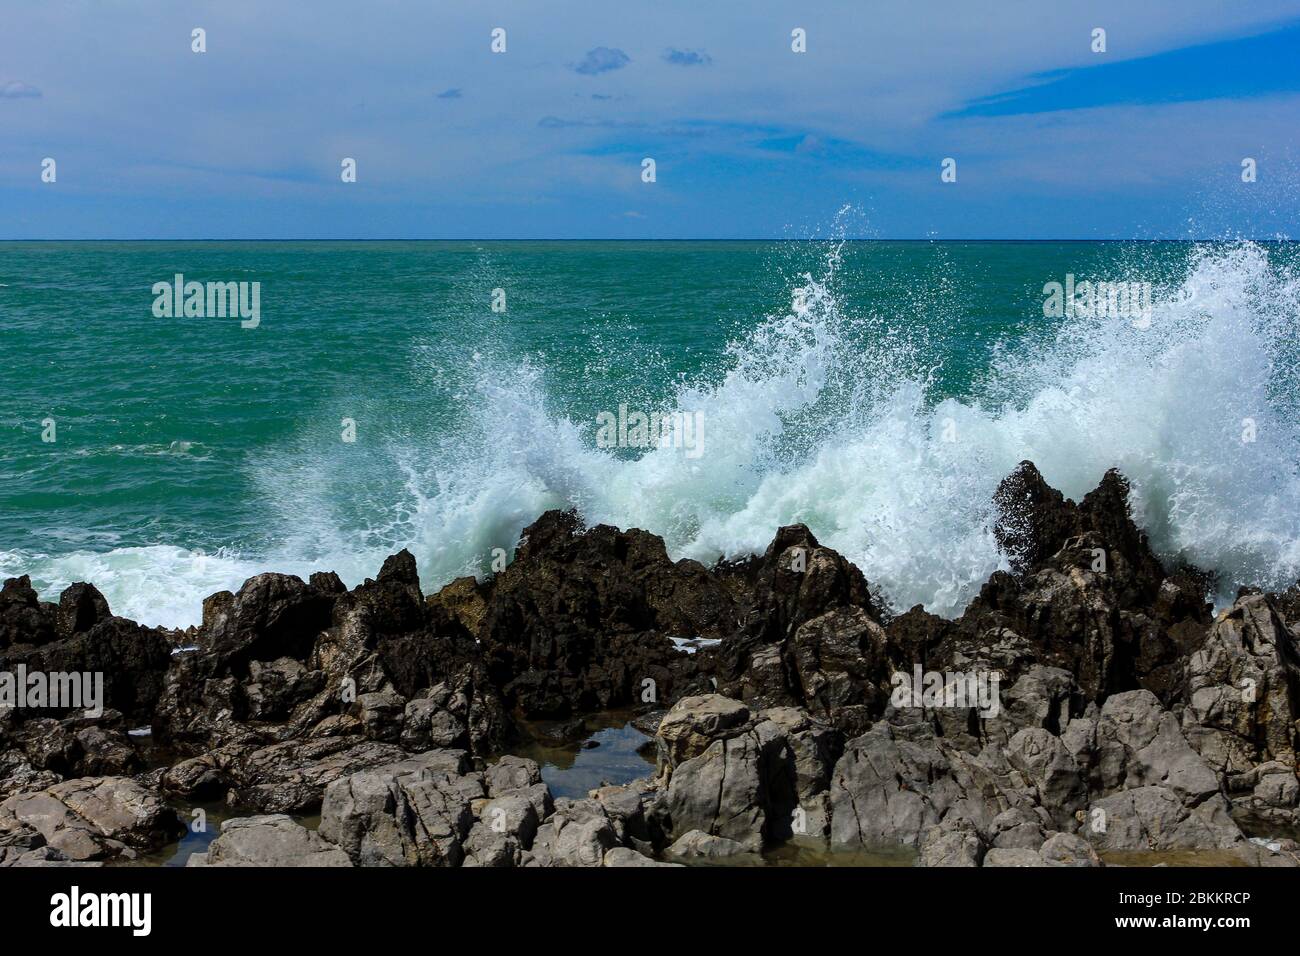 Sea waves crash and splash on rocks.  Stock Photo